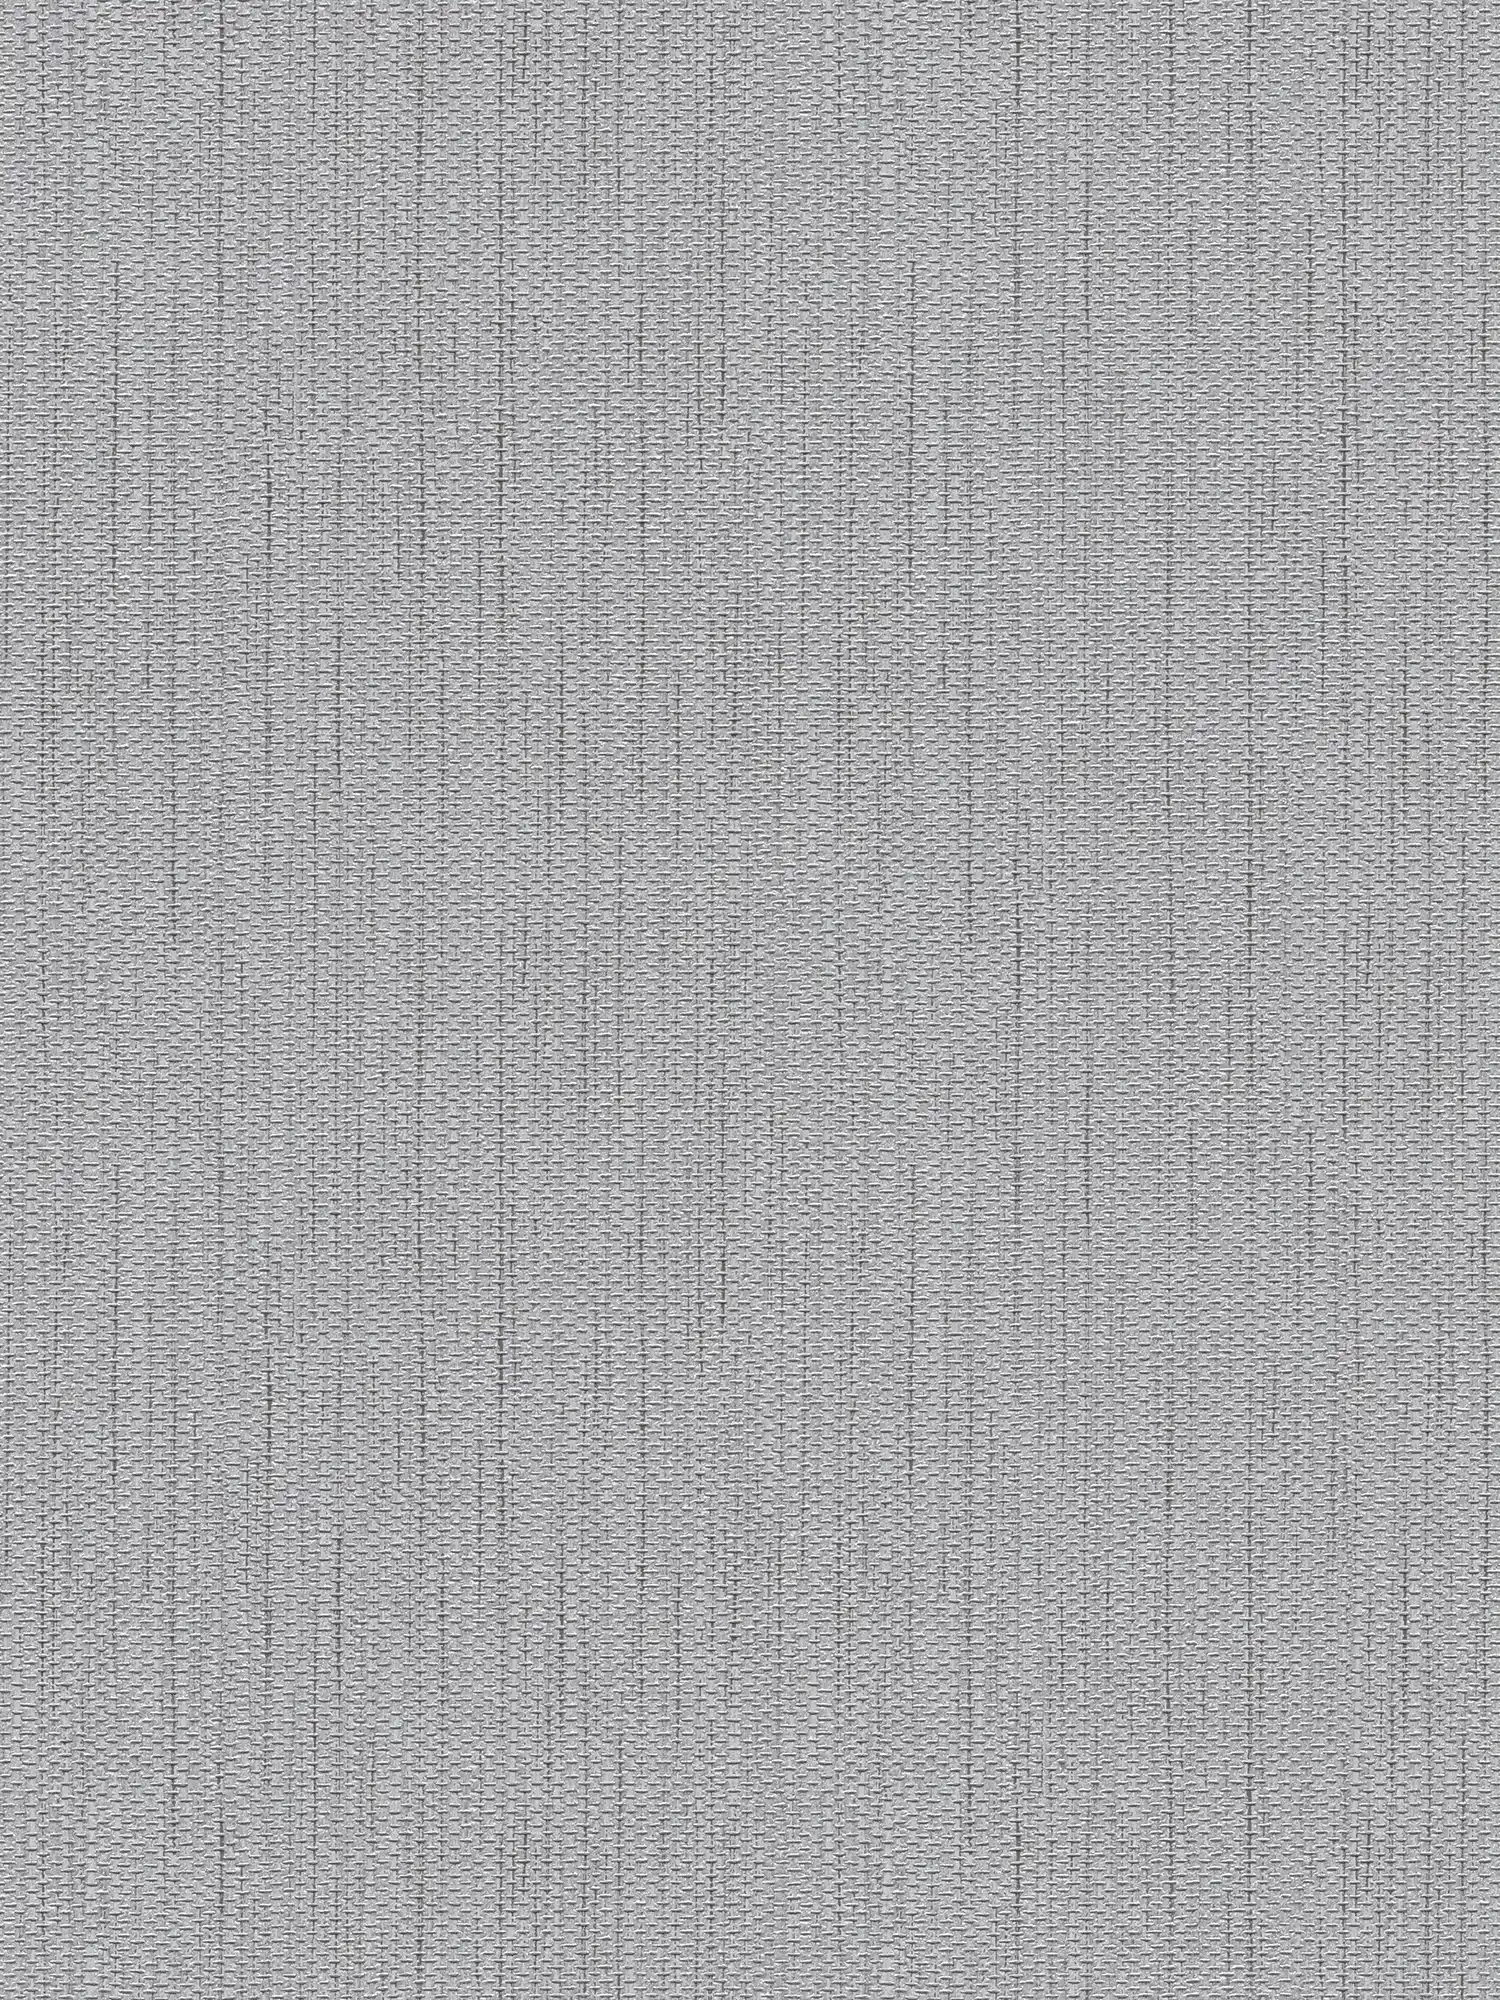 Vliestapete Textiloptik mit Leinen-Struktur – Grau
